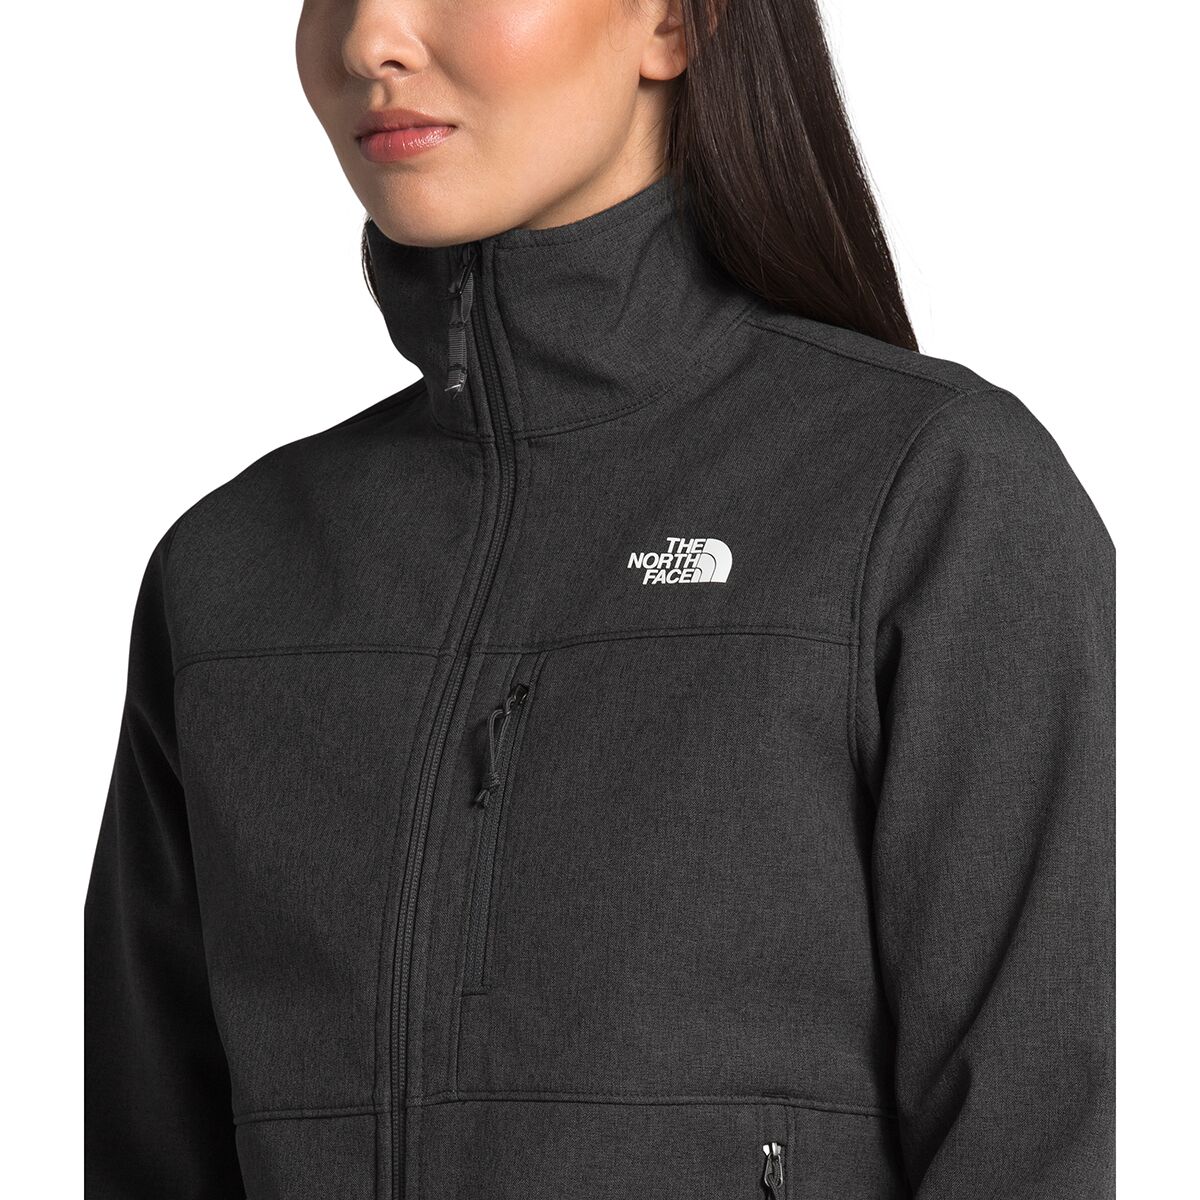 north face apex women's jacket sale